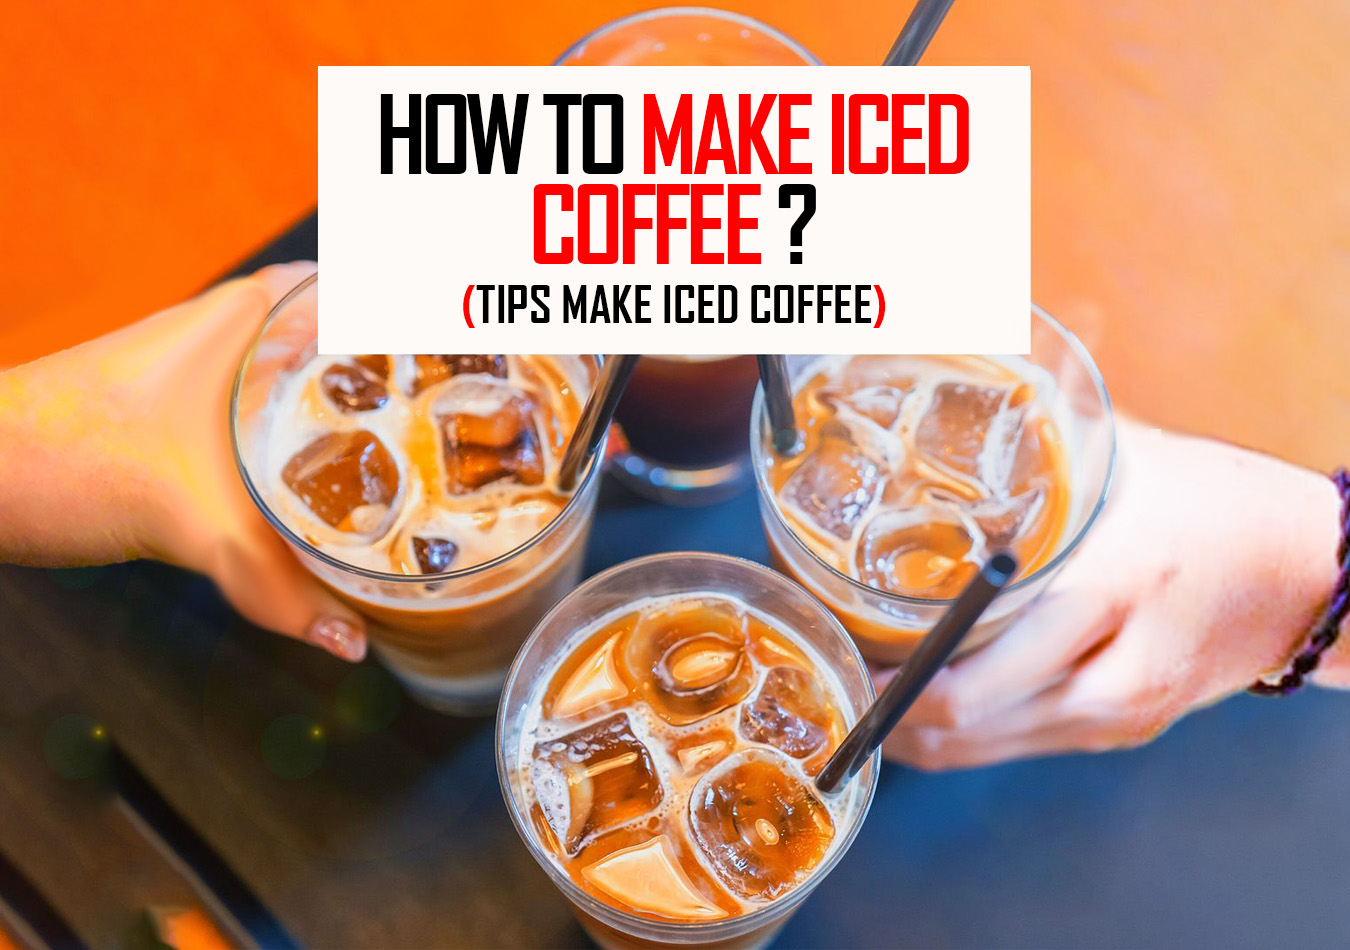 How to make iced coffee?